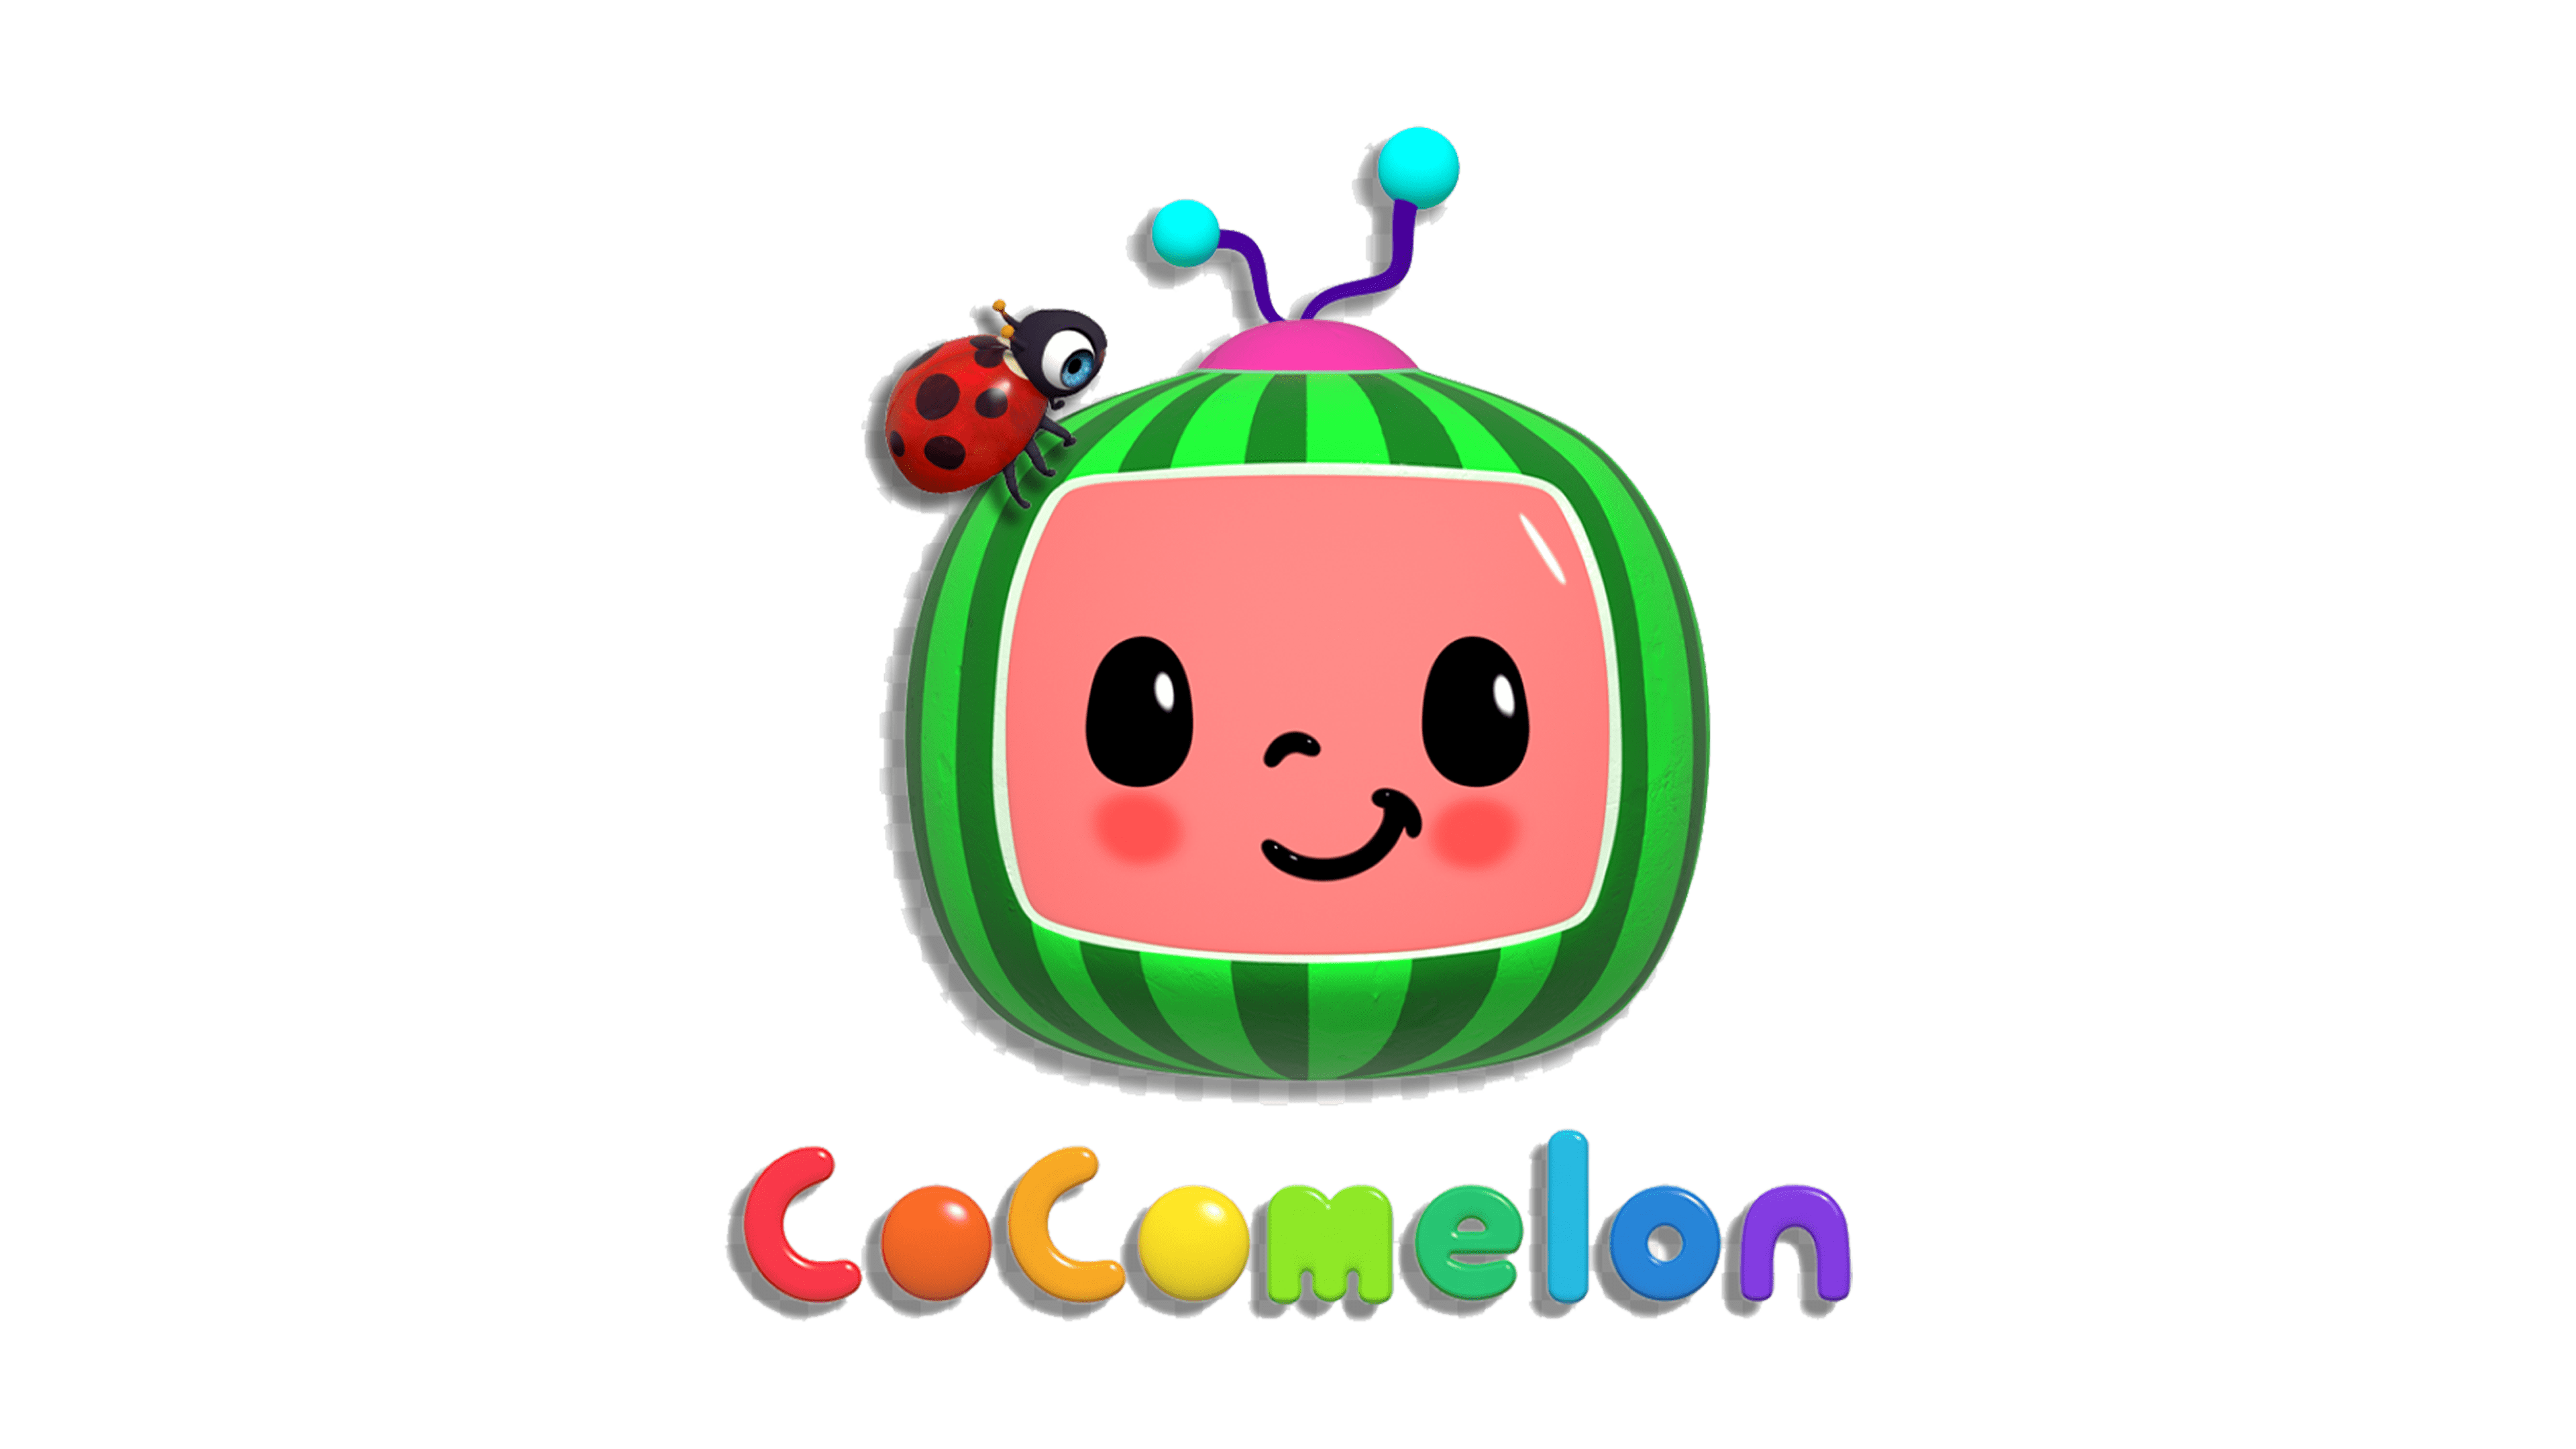 https://1000logos.net/wp-content/uploads/2021/12/Cocomelon-Logo.png